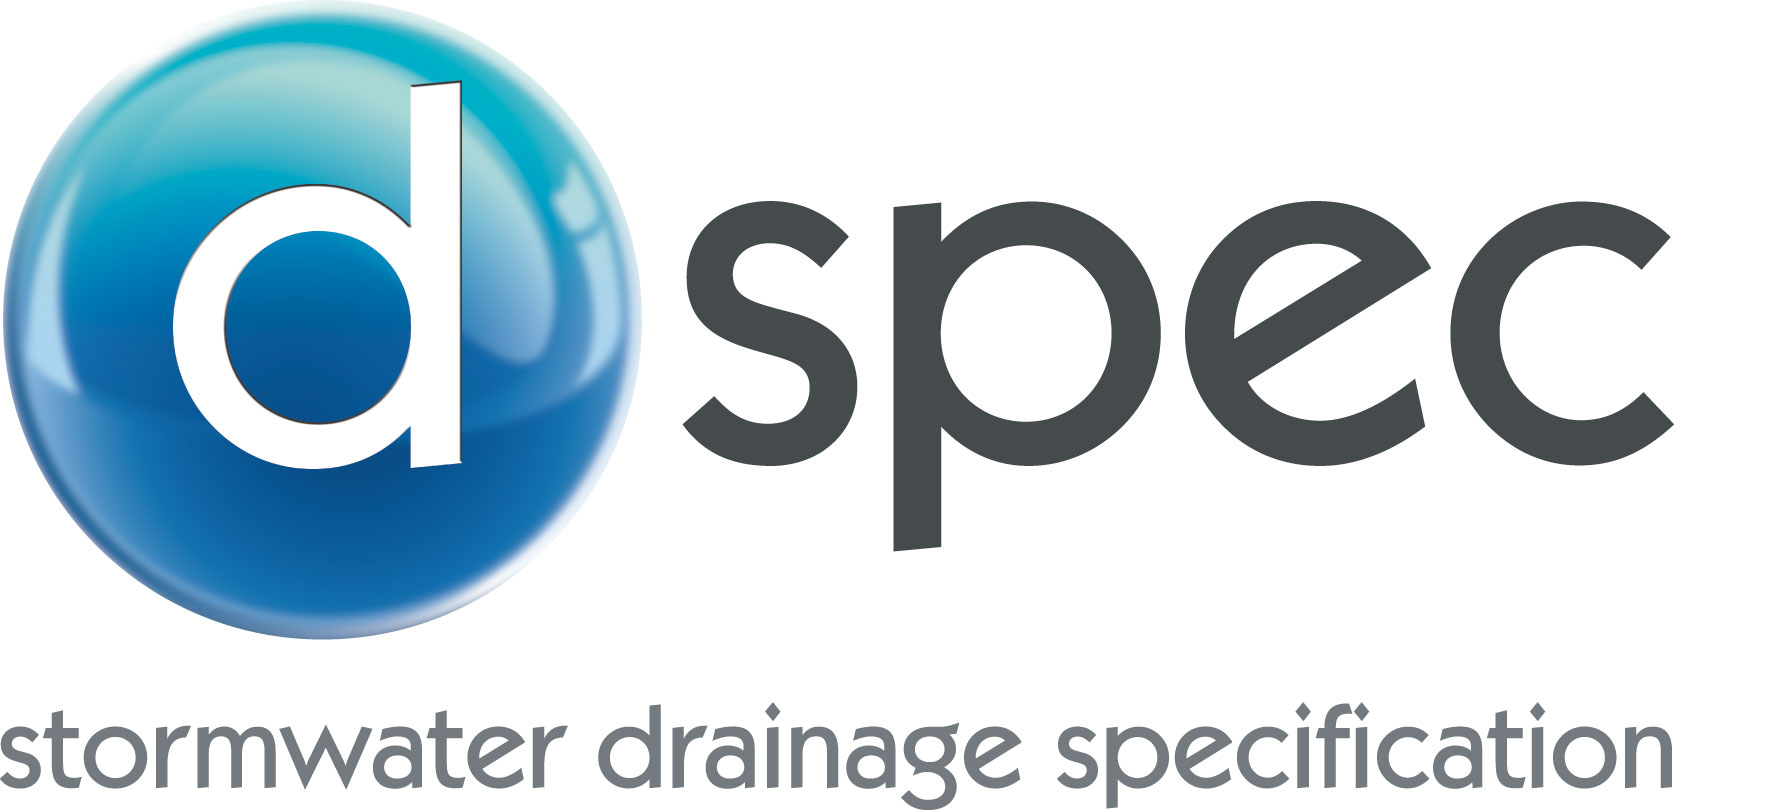 D-Spec logo